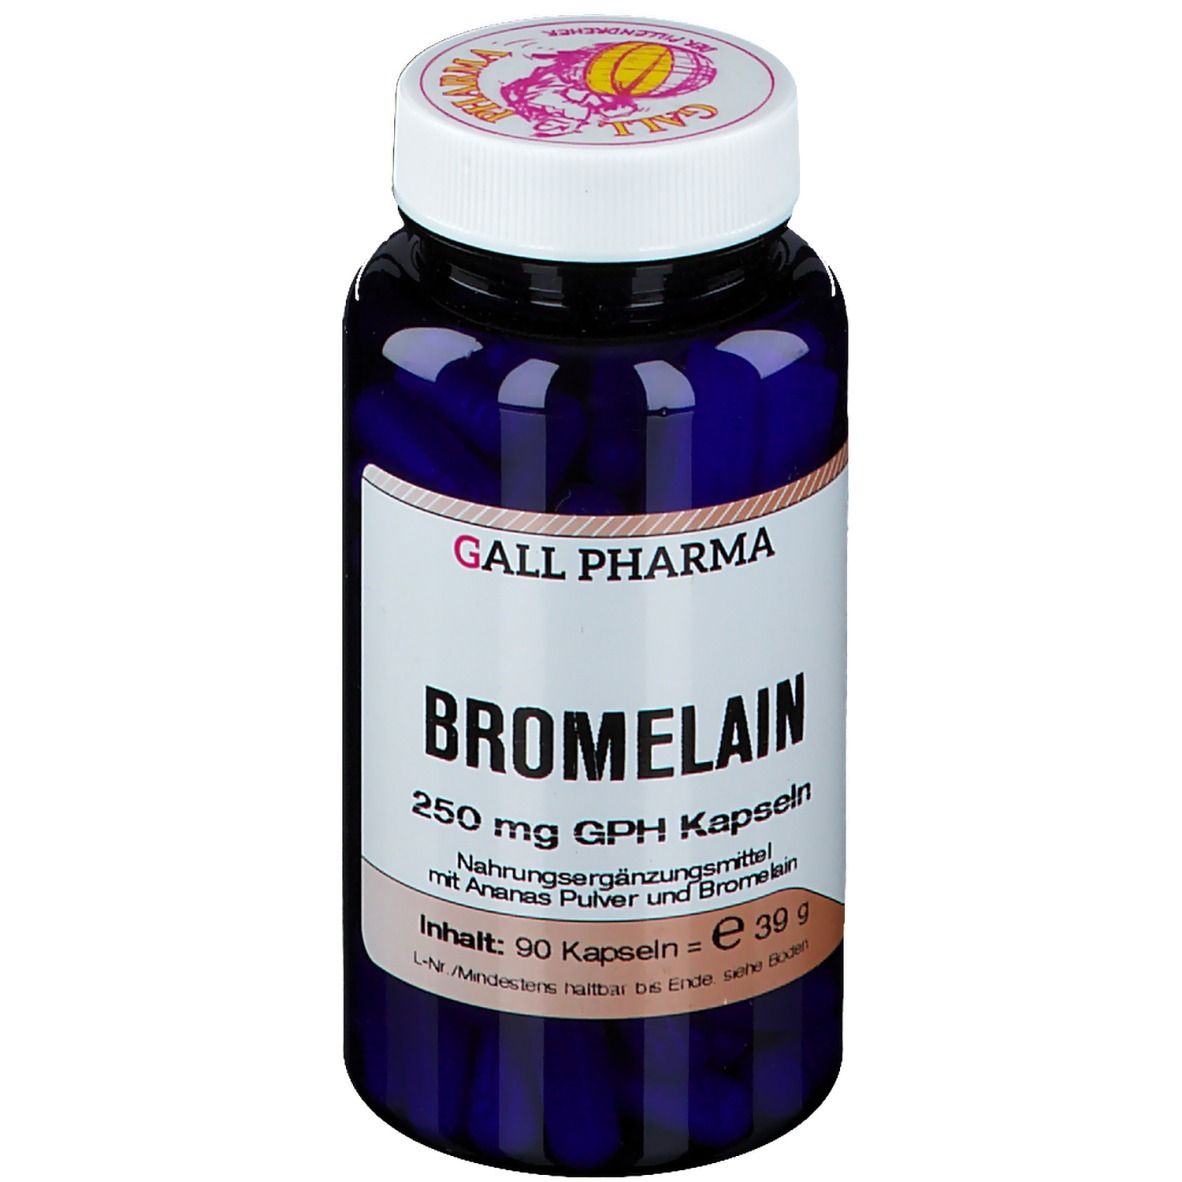 Gall Pharma Bromelain 250 mg GPH